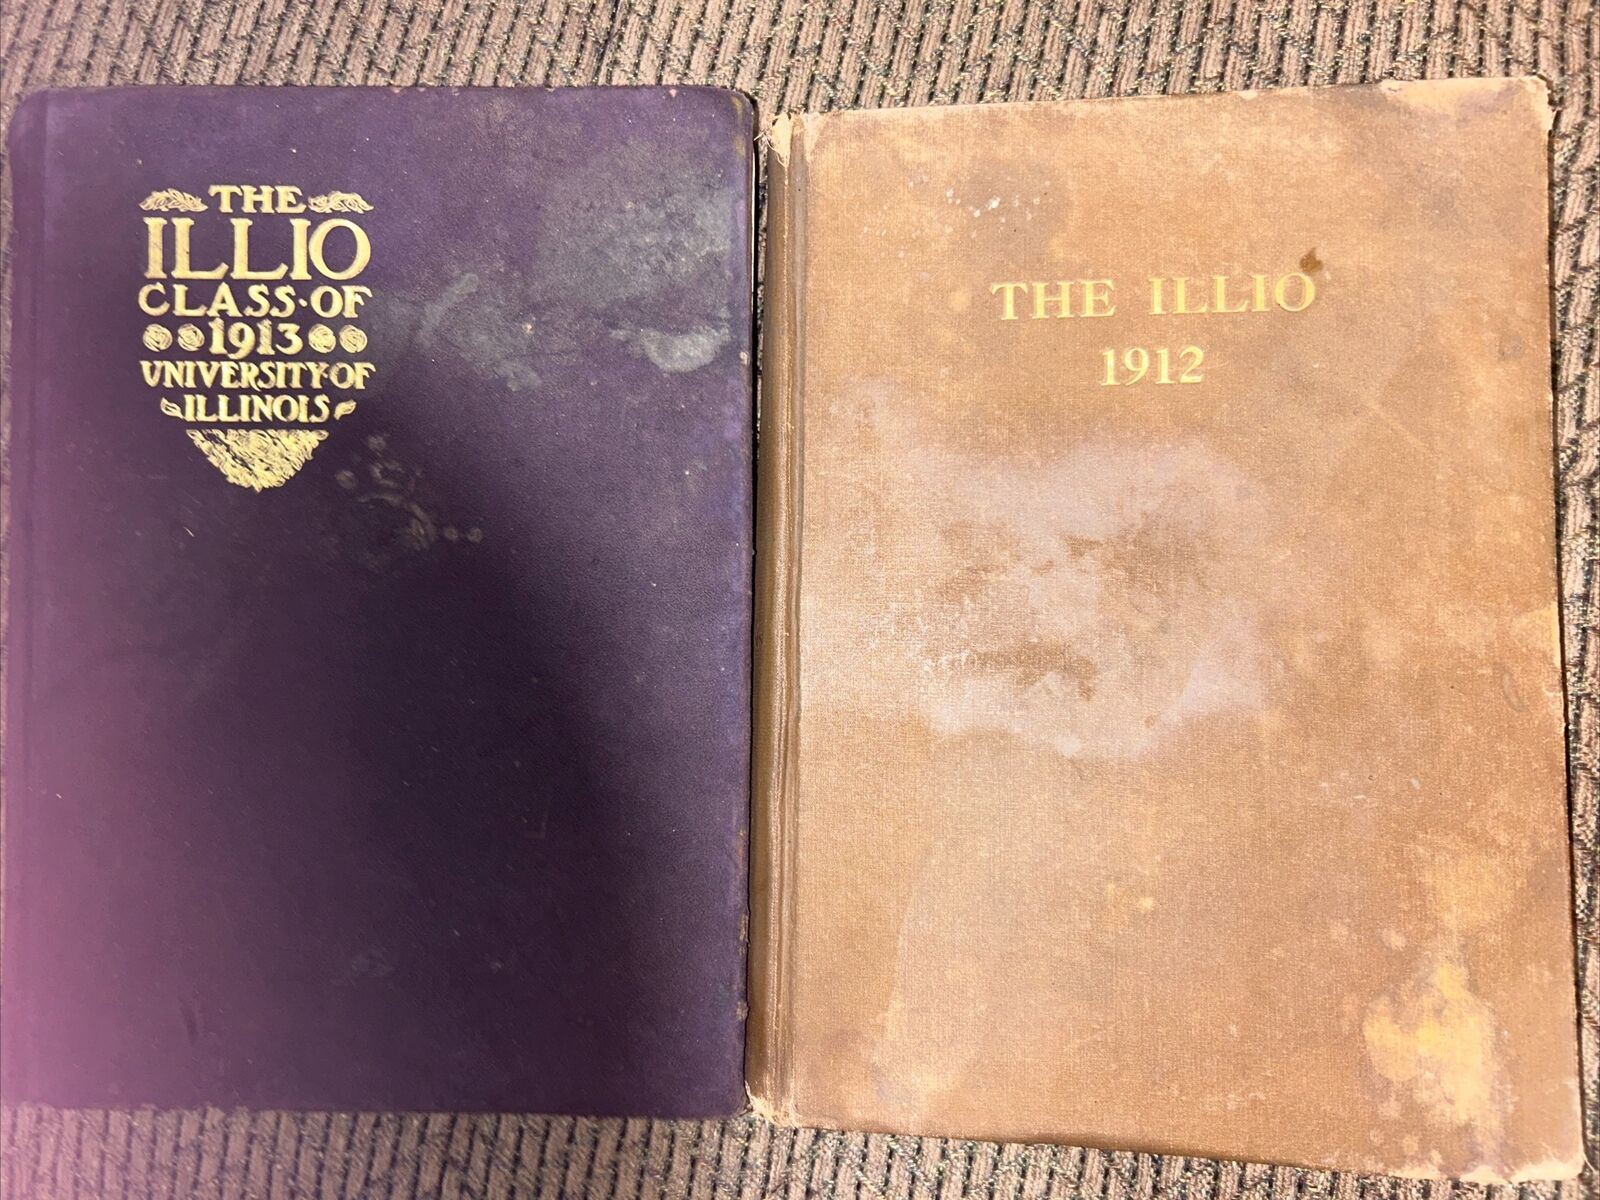 University of Illinois Urbana-Champaign Yearbook 1912 and 1913 The Illio, Accept